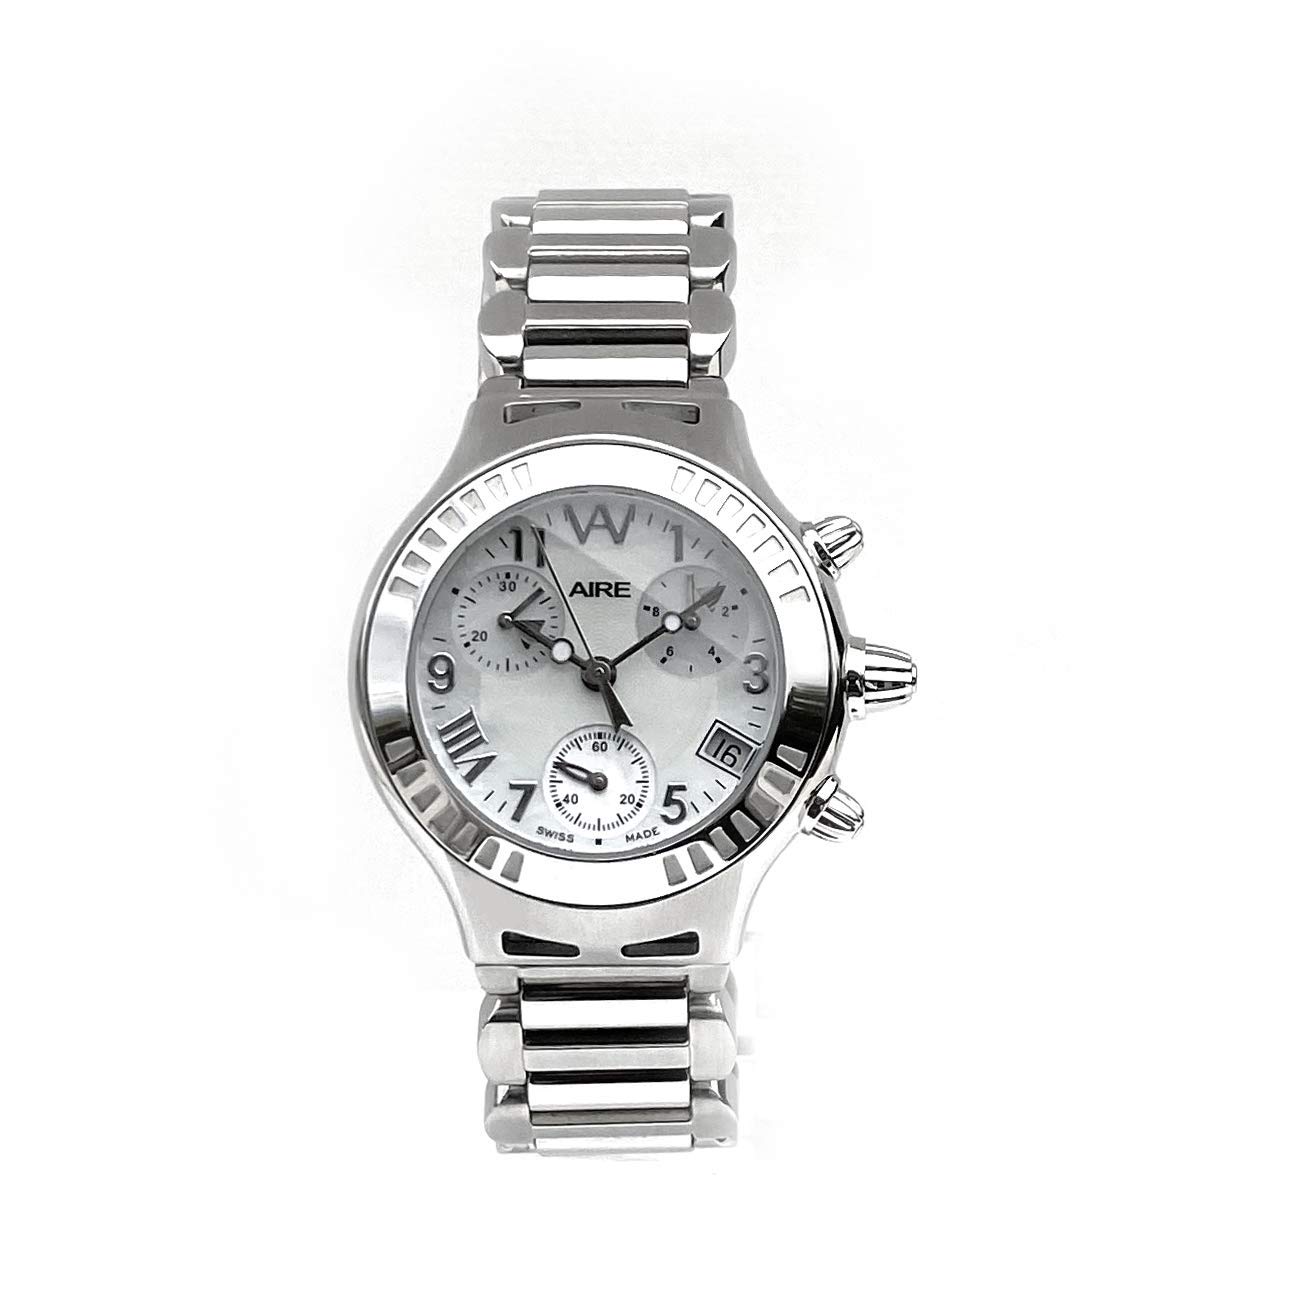 Chris Aire Parlay Swiss Made Quartz Chronograph Women's Watch